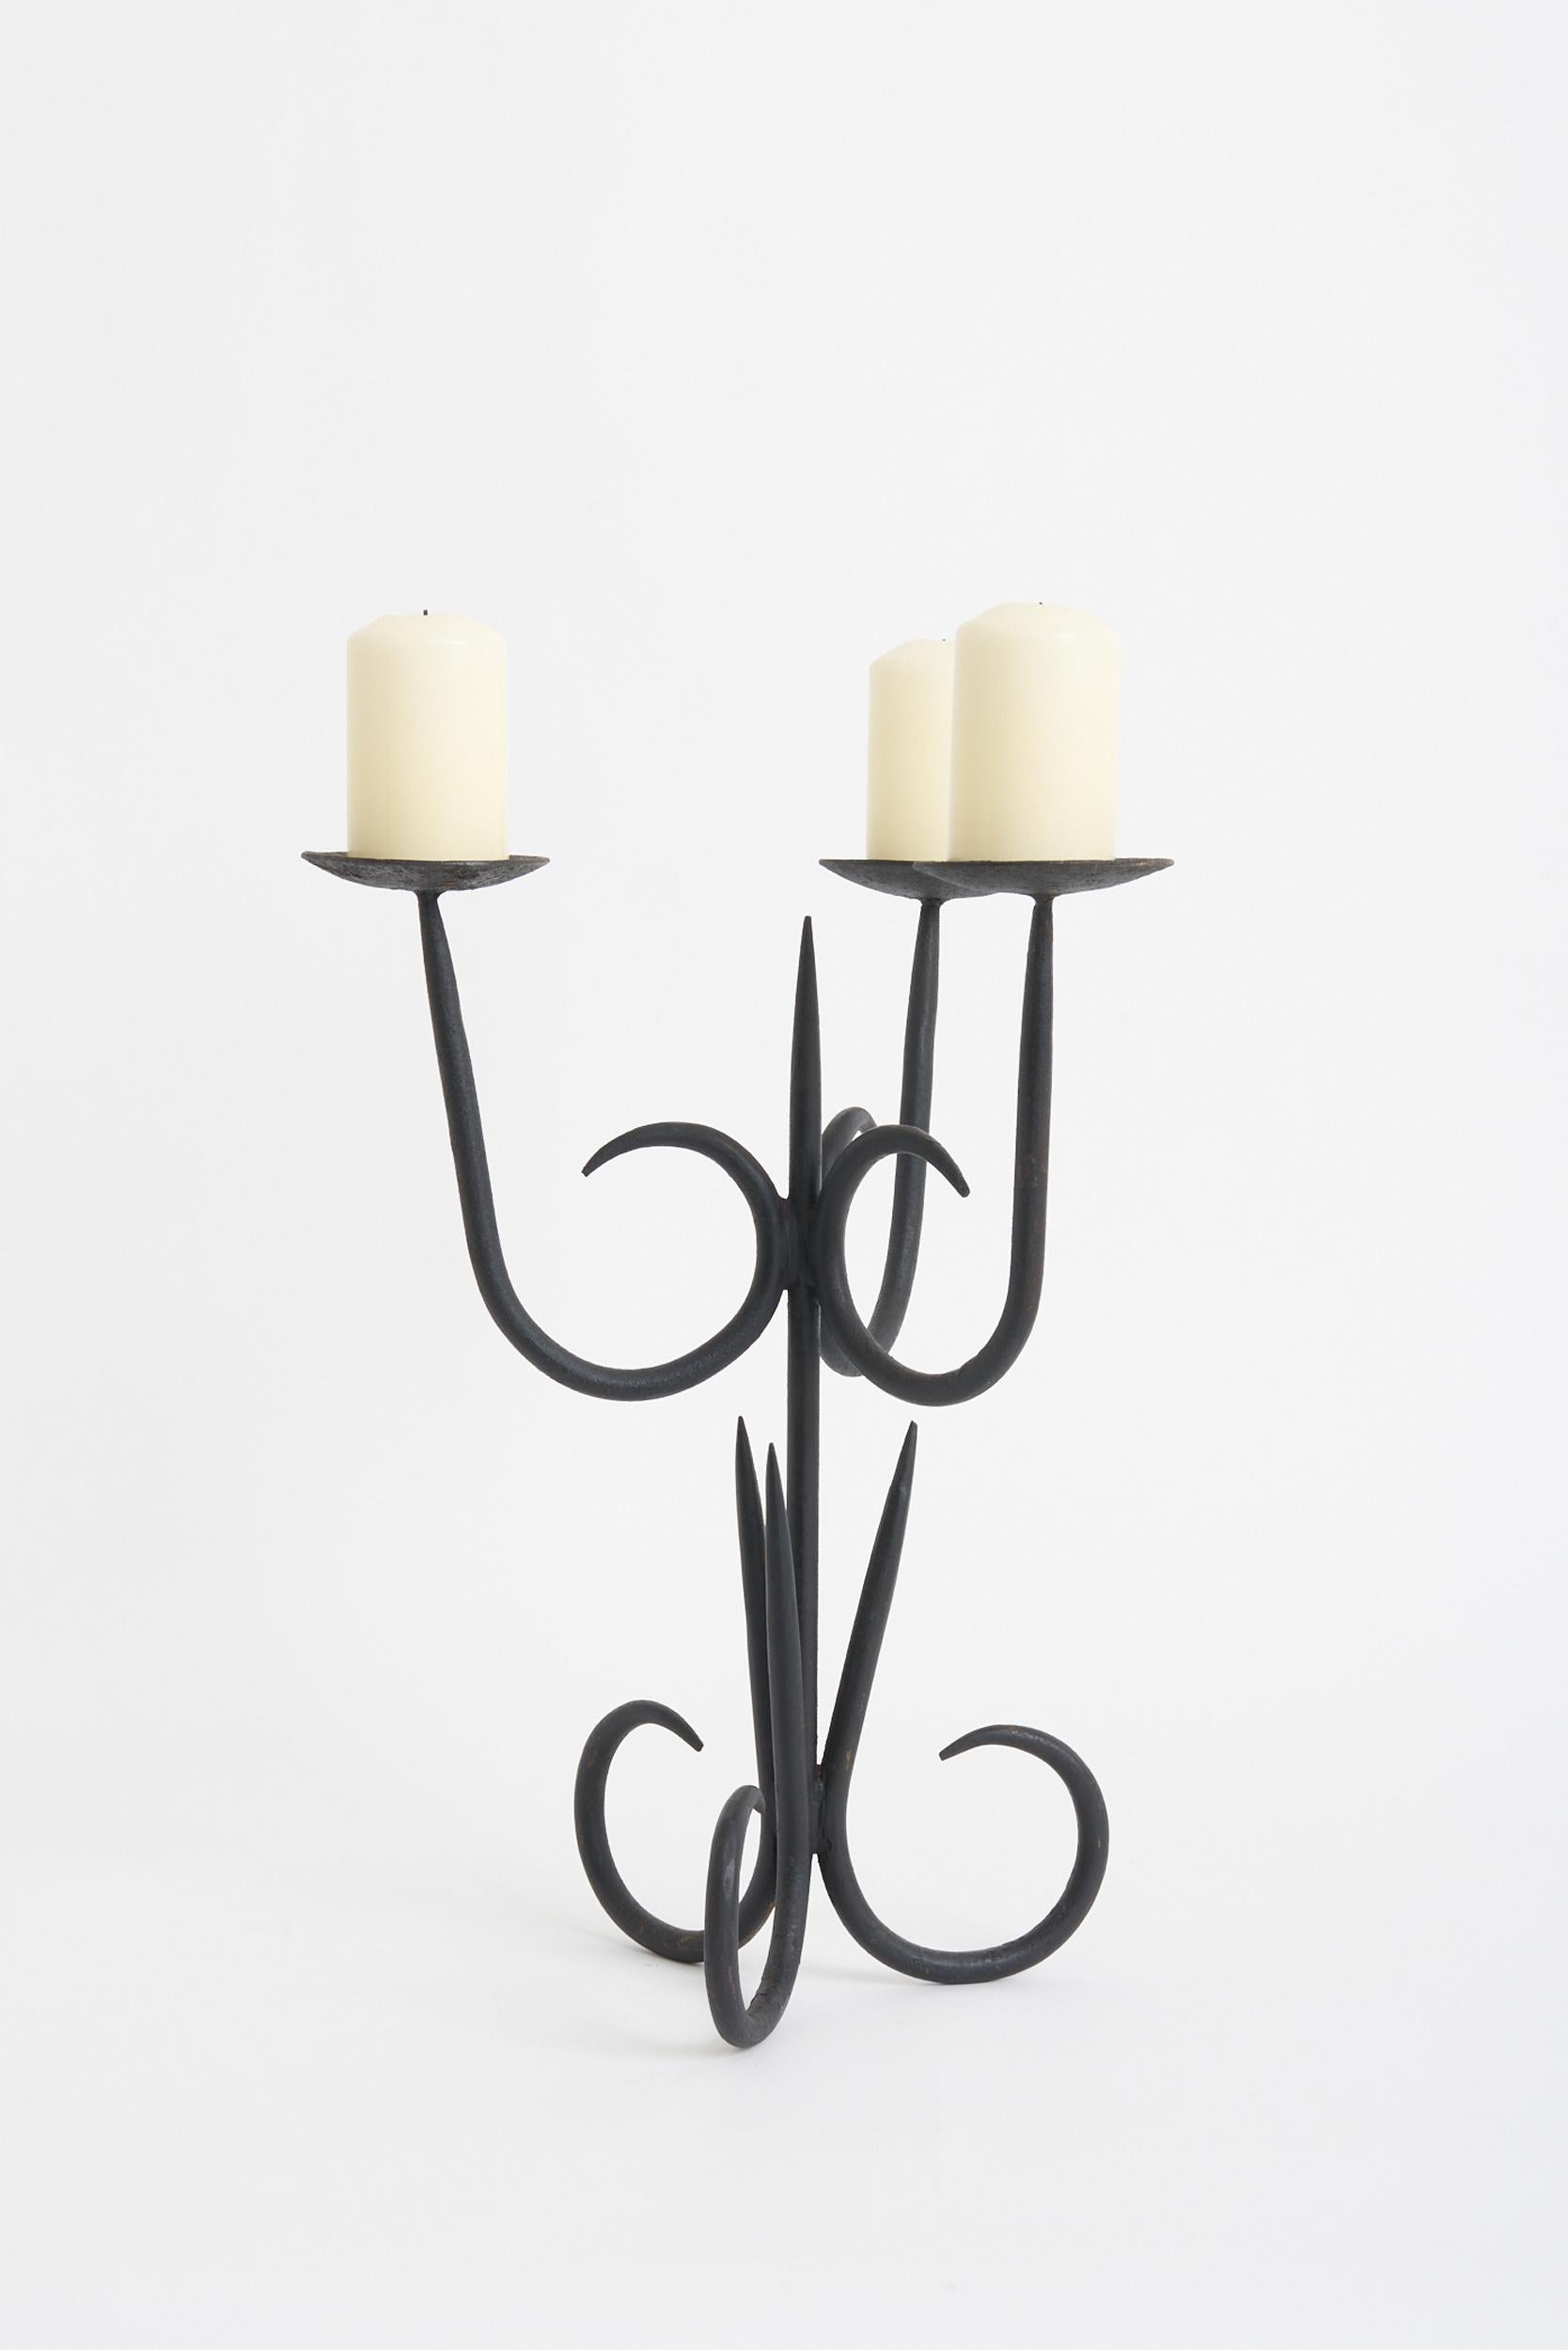 A black wrought iron three-arm candelabra.
France, 1950s.